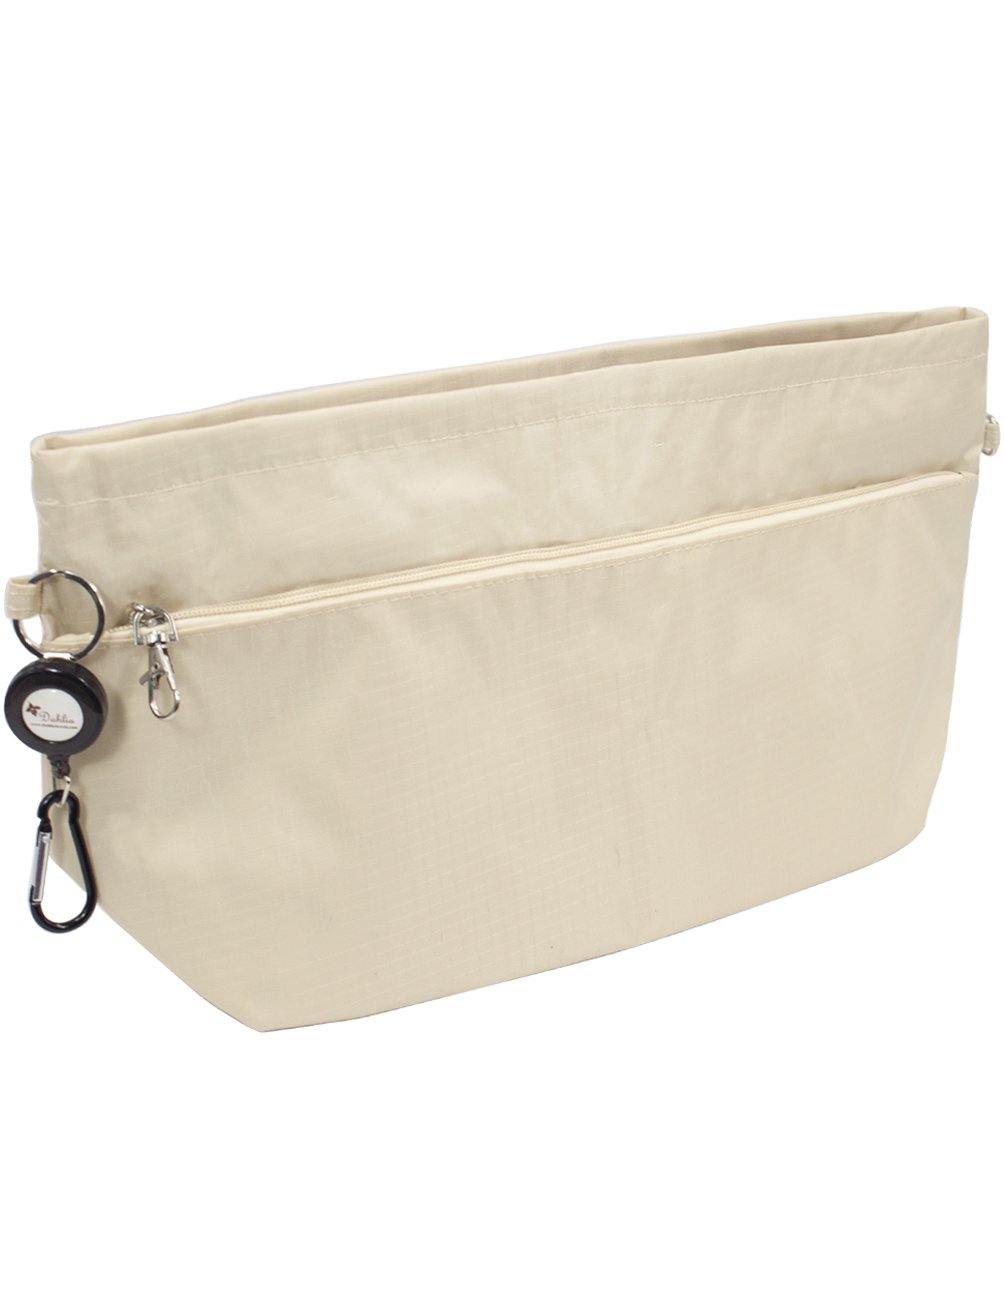 Dahlia Patented Handbag Purse Organizer Insert - Sturdy Flexible